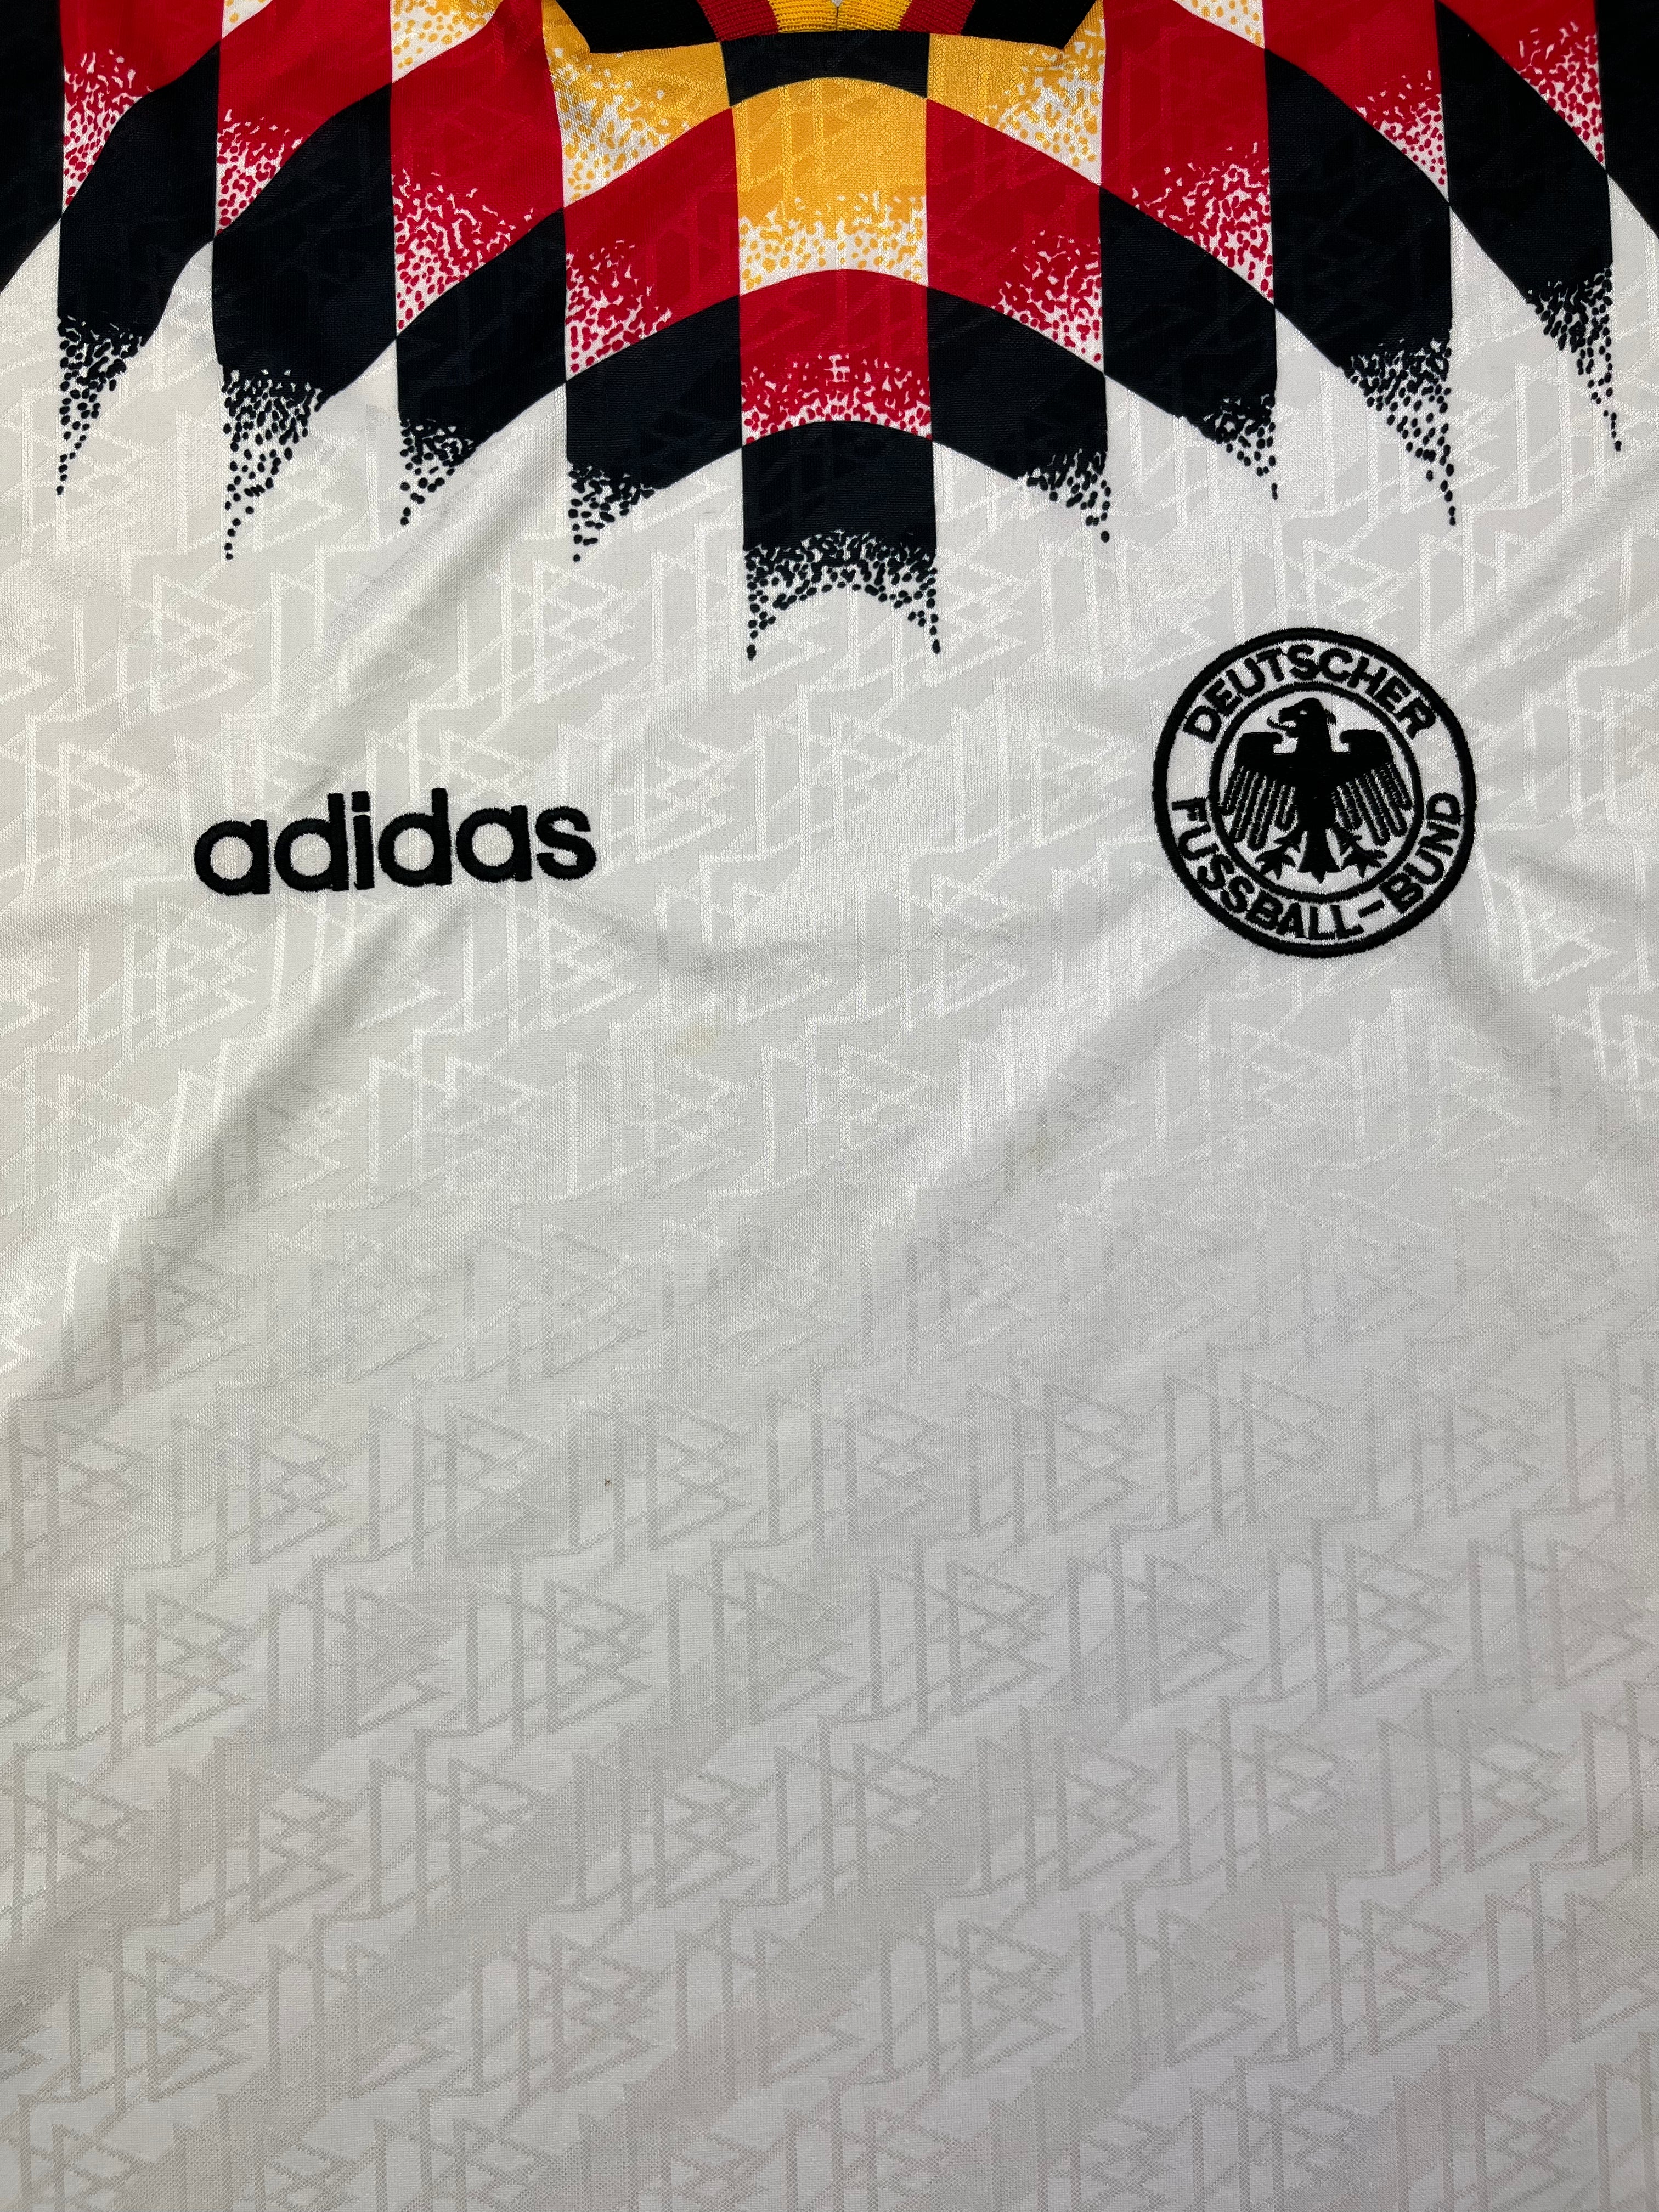 1994/96 Camiseta local de Alemania (XL) 9/10